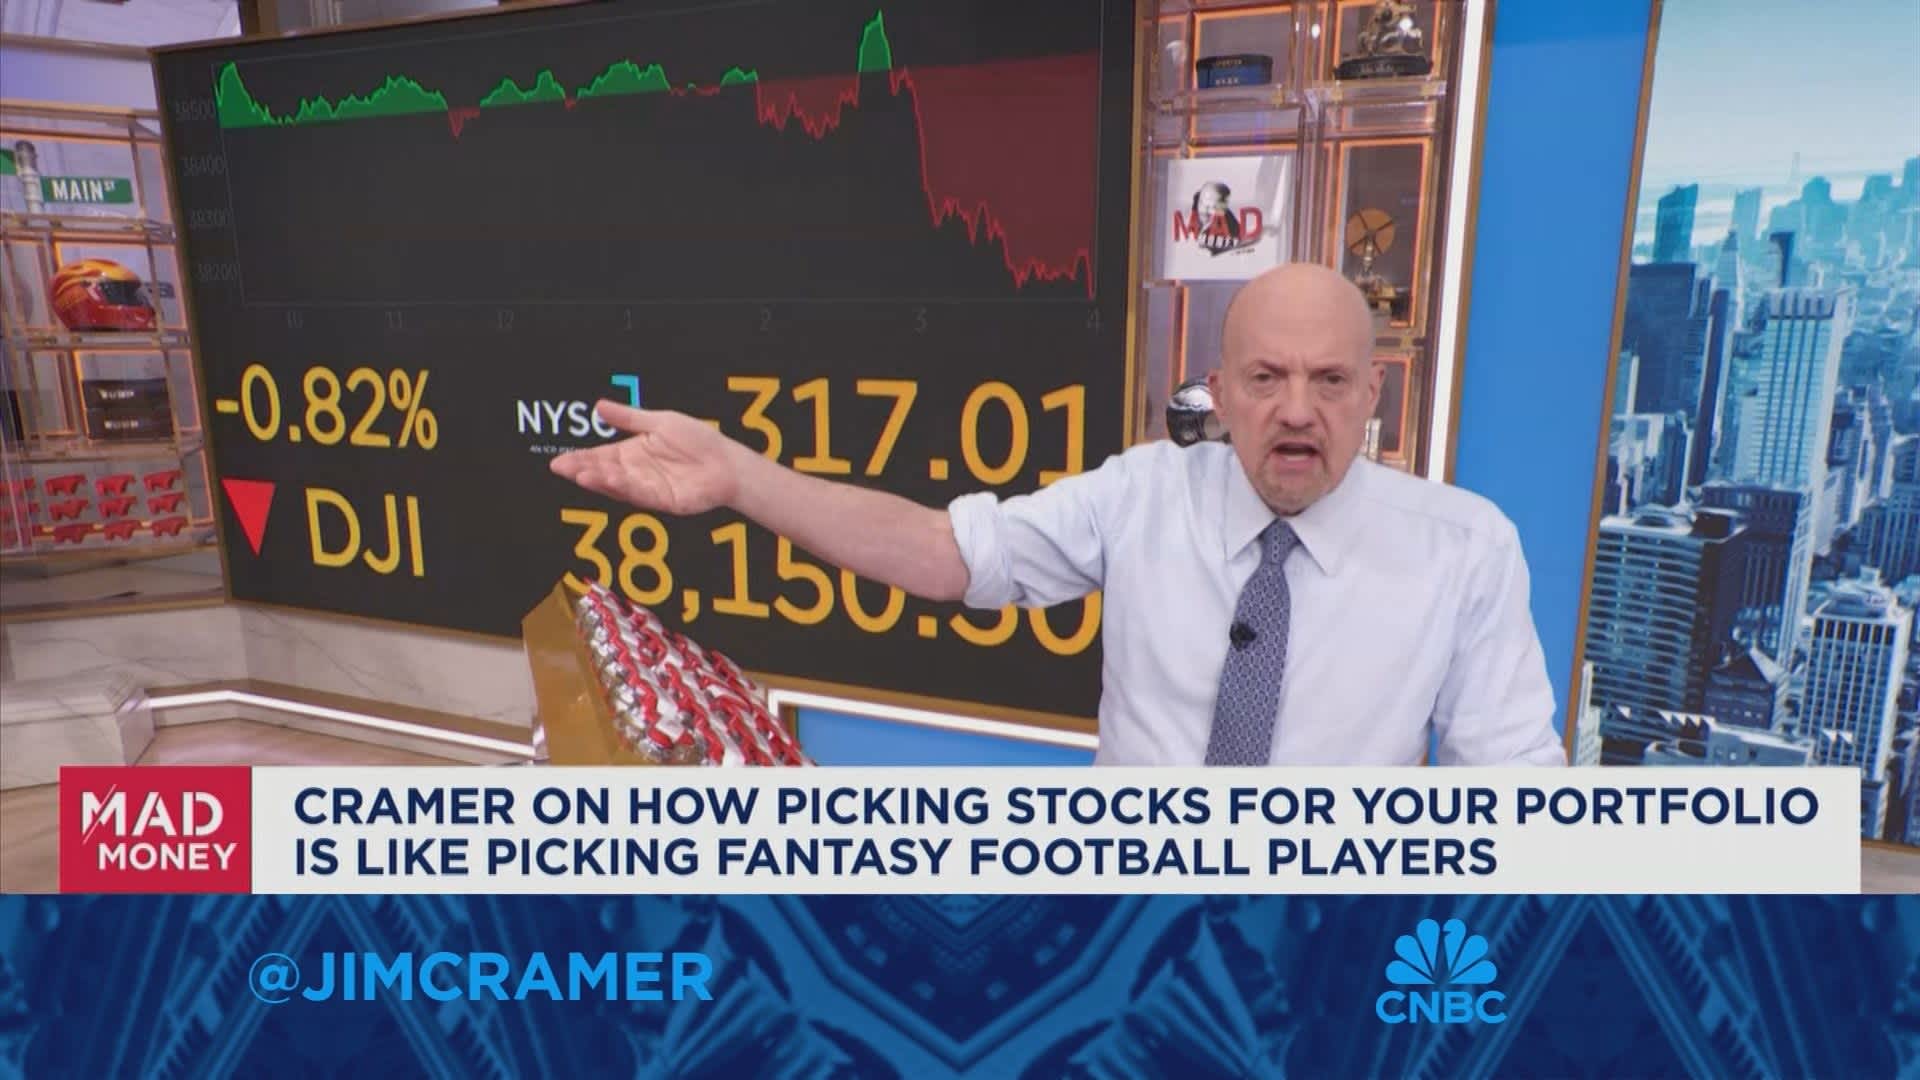 Picking stocks is like picking fantasy football players, says Jim Cramer